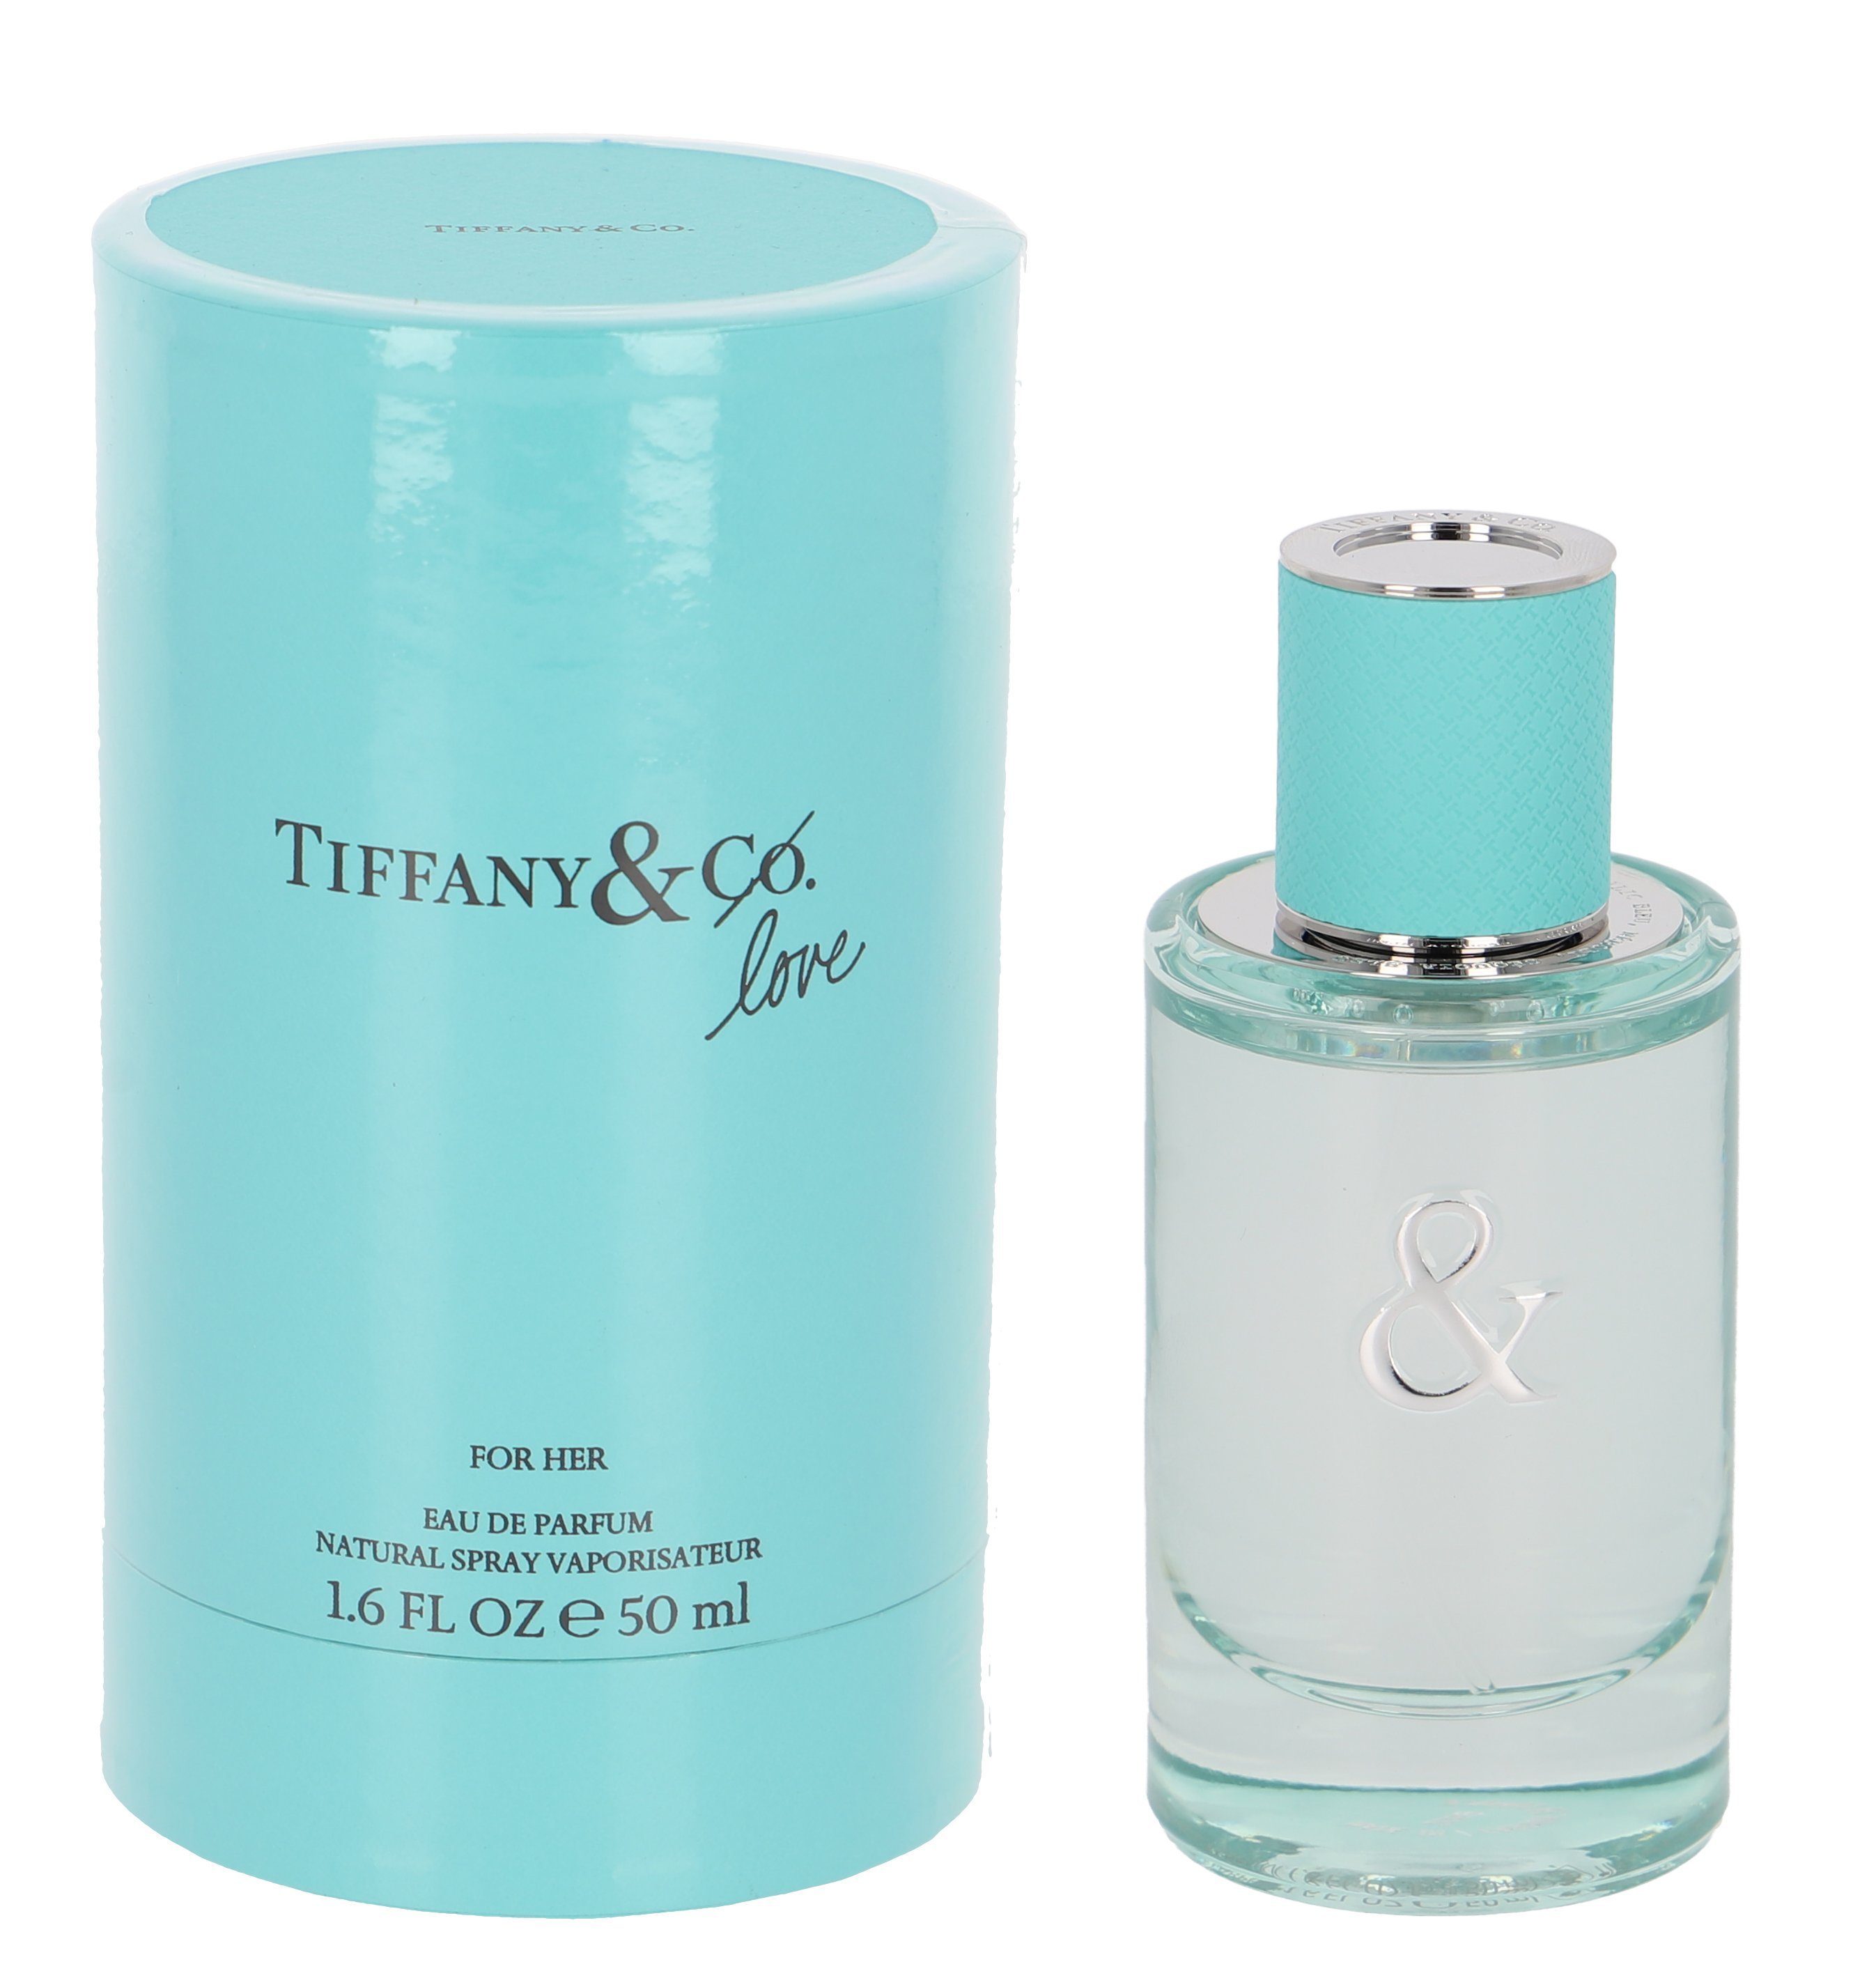 Tiffany&Co Eau de Parfum Tiffany & Co. Love Femme